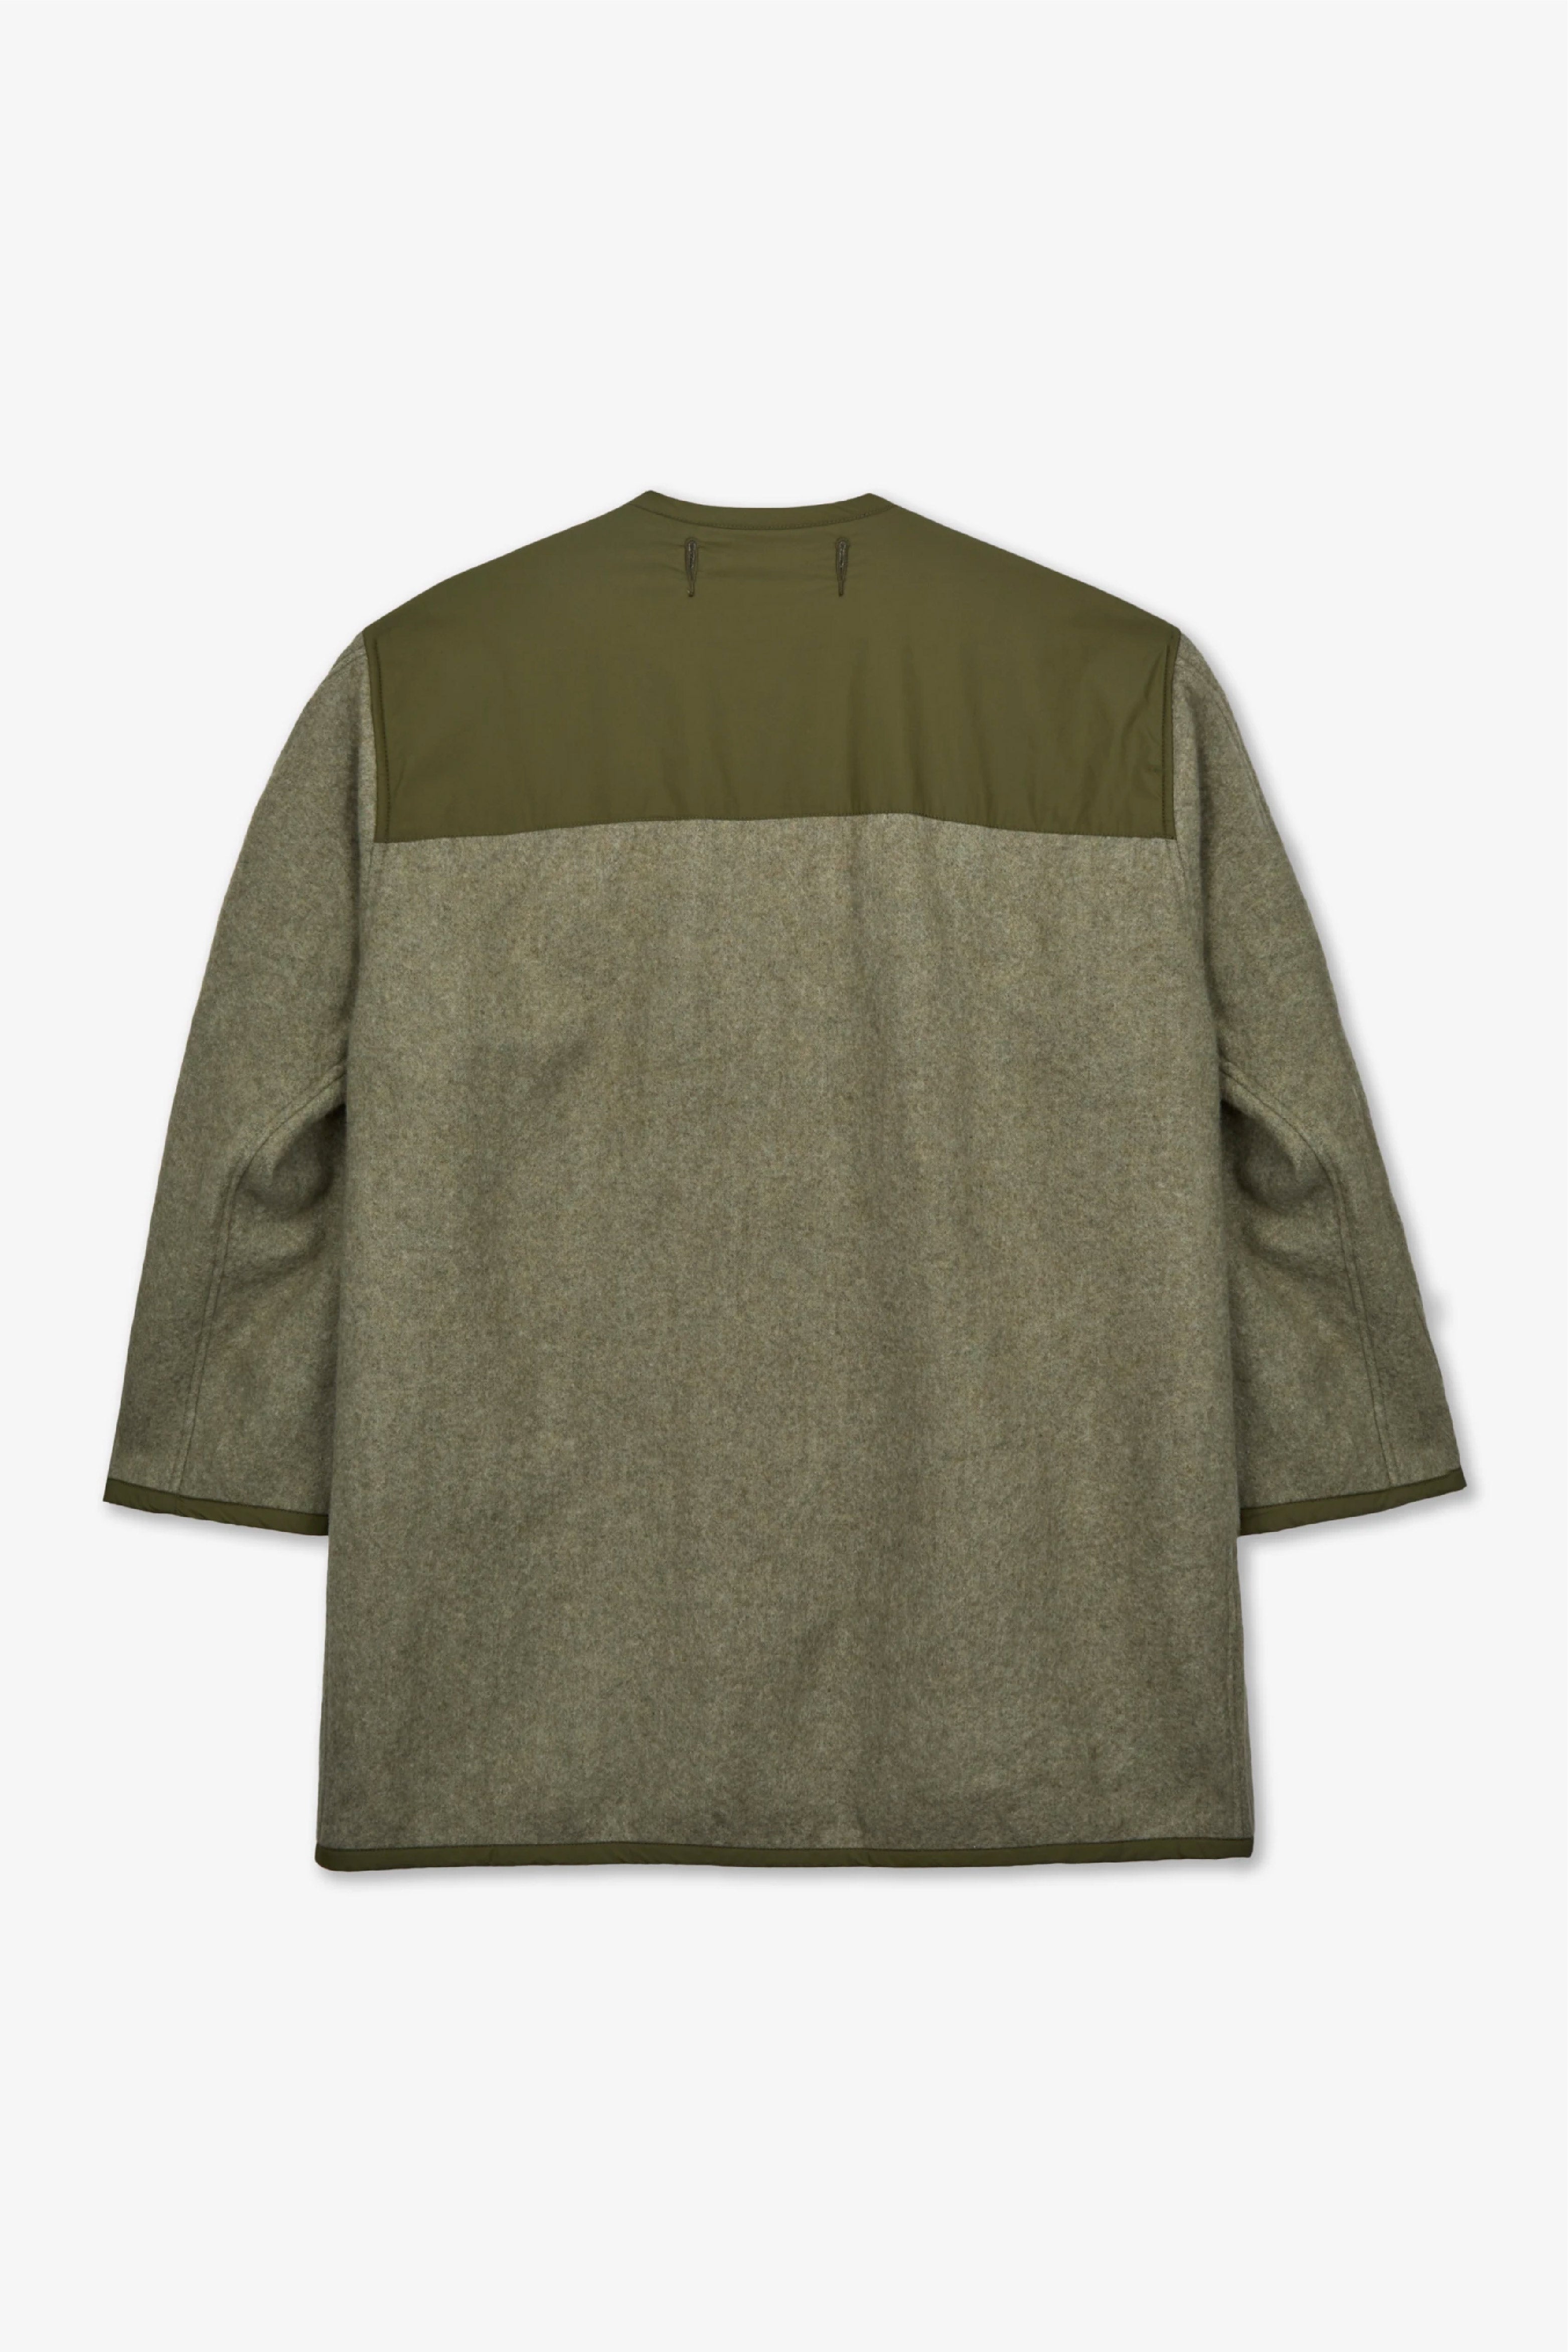 Selectshop FRAME - JUNYA WATANABE MAN Wool Liner Jacket Outerwear Dubai